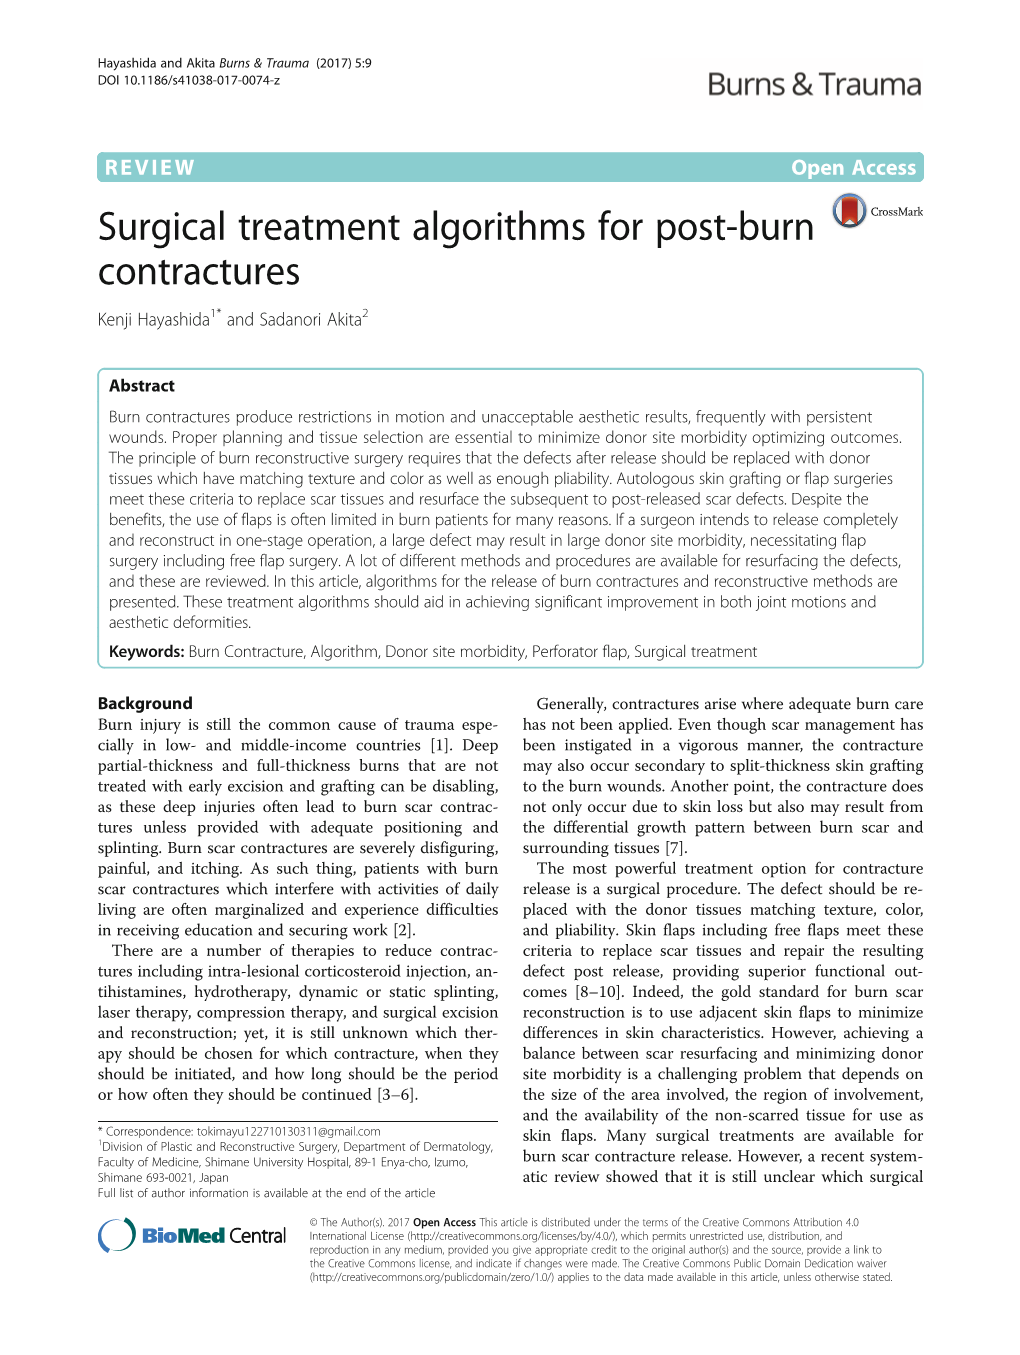 Surgical Treatment Algorithms for Post-Burn Contractures Kenji Hayashida1* and Sadanori Akita2